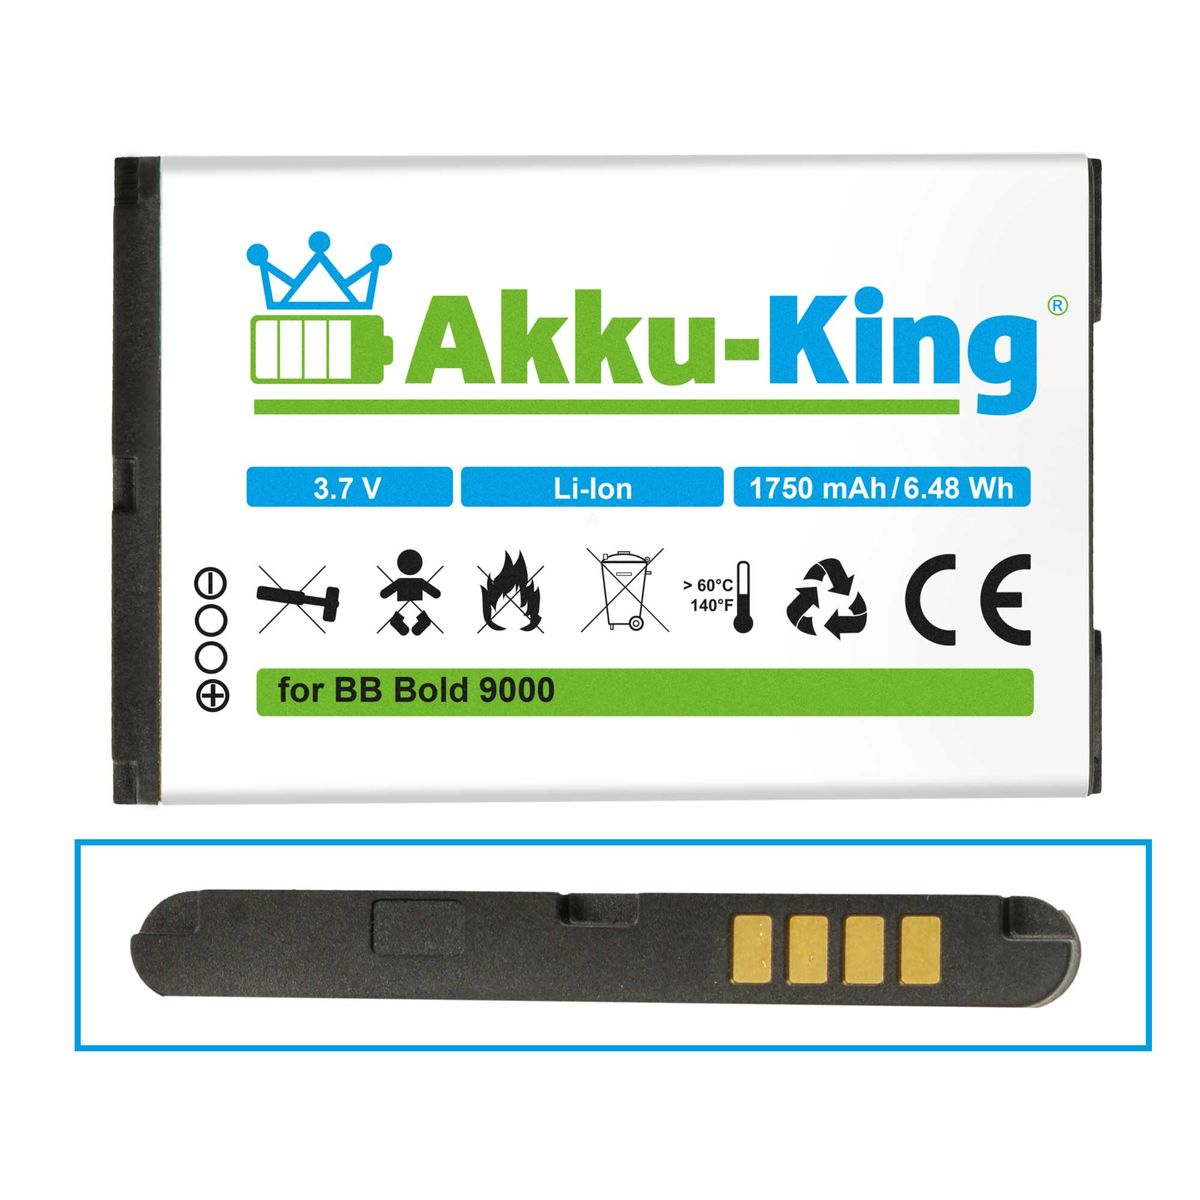 AKKU-KING 3.7 Akku Handy-Akku, Blackberry für Volt, 1700mAh M-S1 Li-Ion